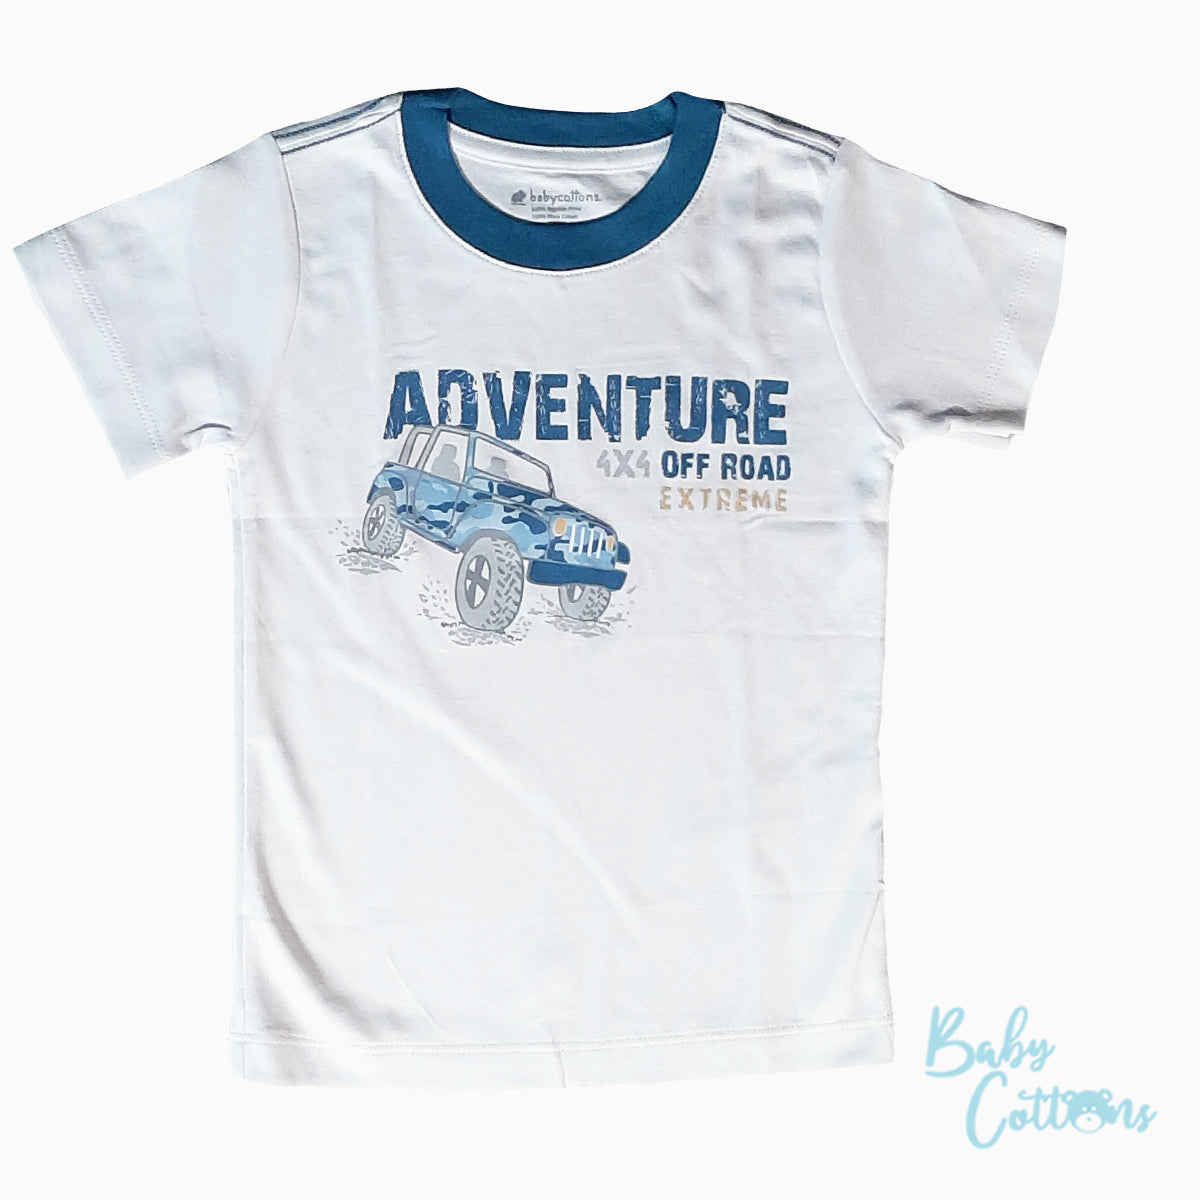 Camiseta Babycottons Adventure Blanco Azul